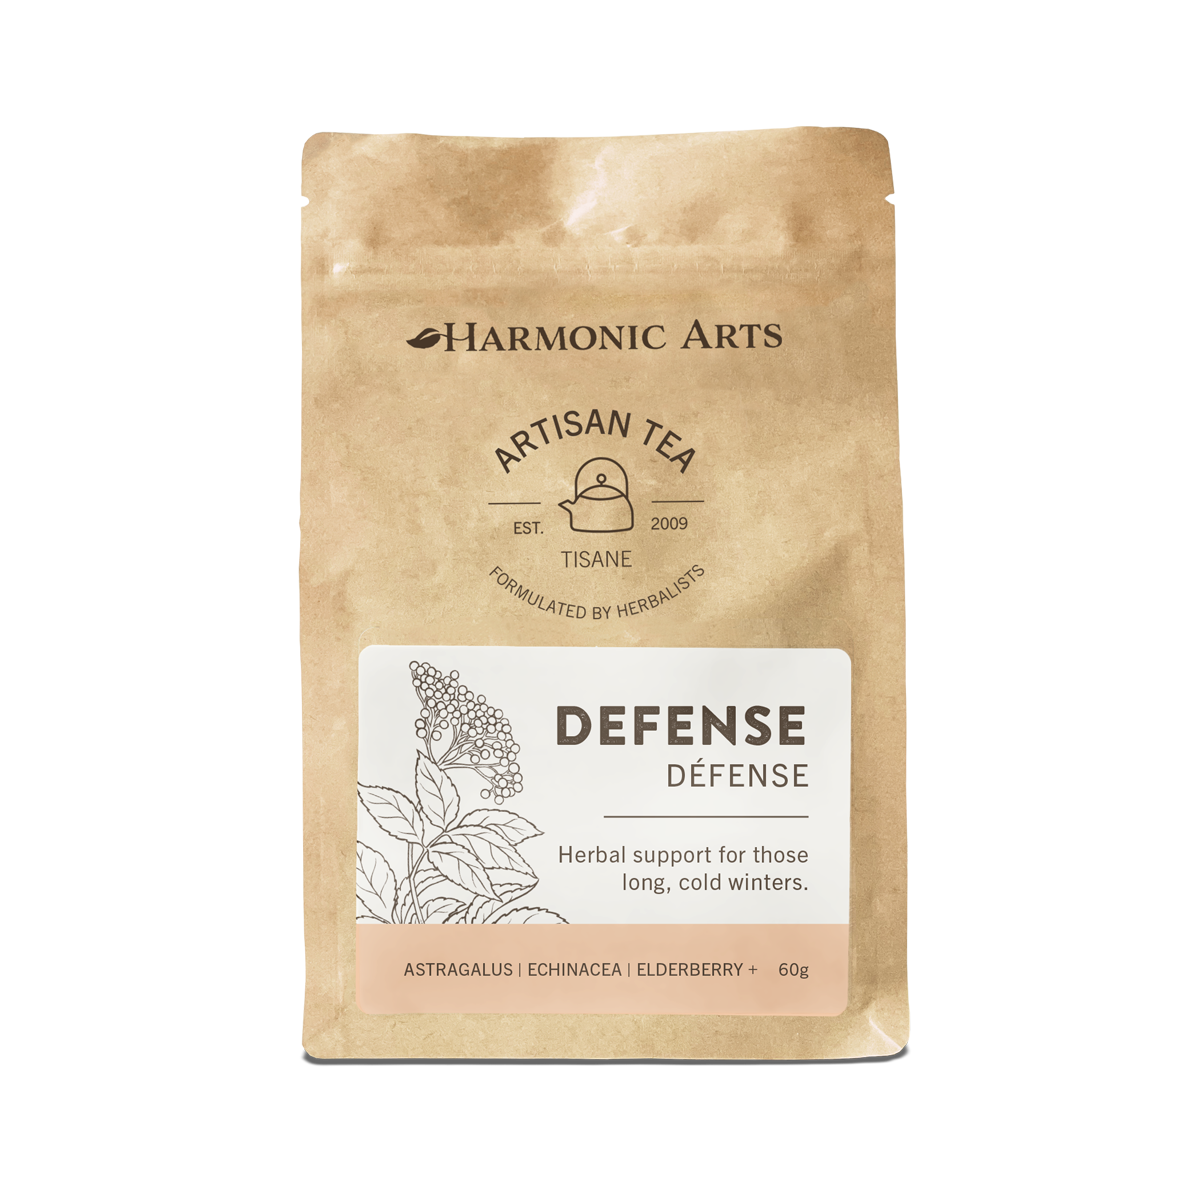 Harmonic Arts Defense Artisan Tea